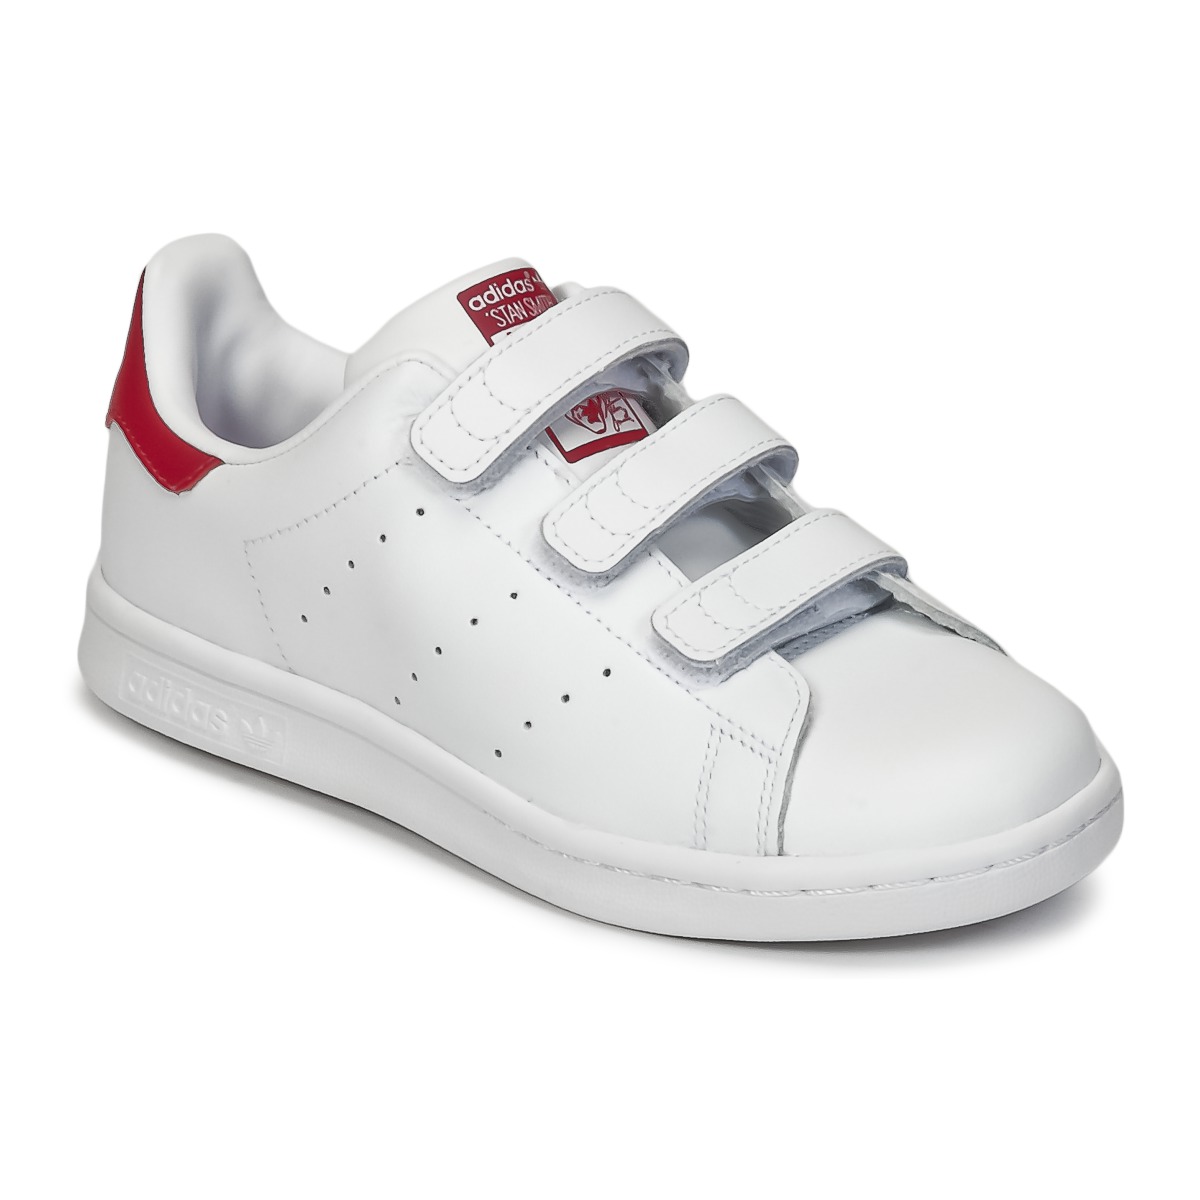 Sapatos Rapariga Sapatilhas adidas Originals STAN SMITH CF C Branco